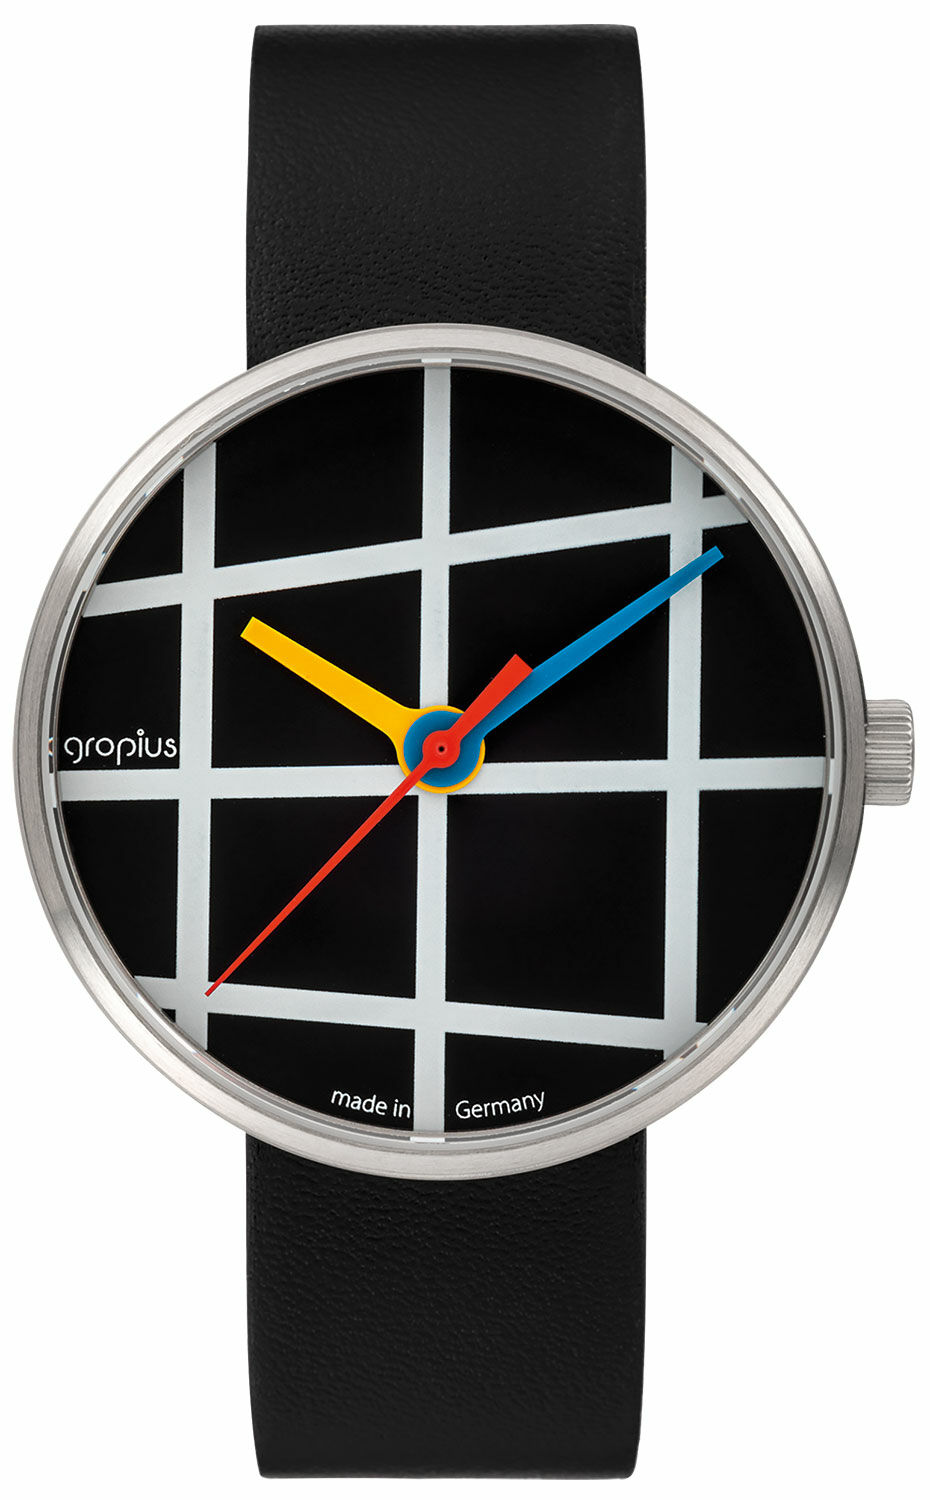 Wristwatch "Window black" Bauhaus style